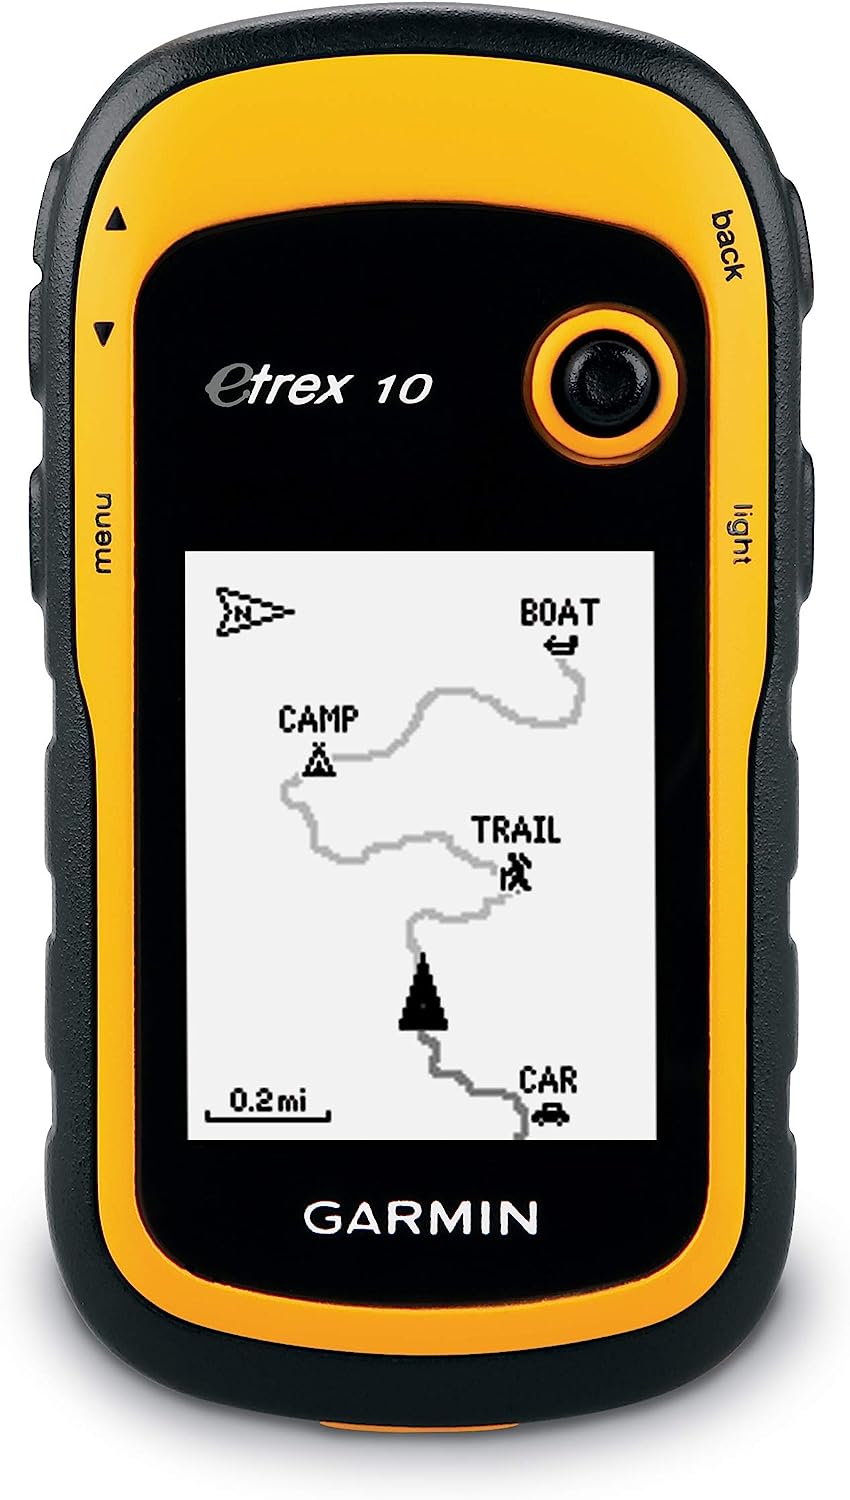 Review of Garmin 010-00970-00 eTrex 10 Worldwide Handheld GPS Navigator